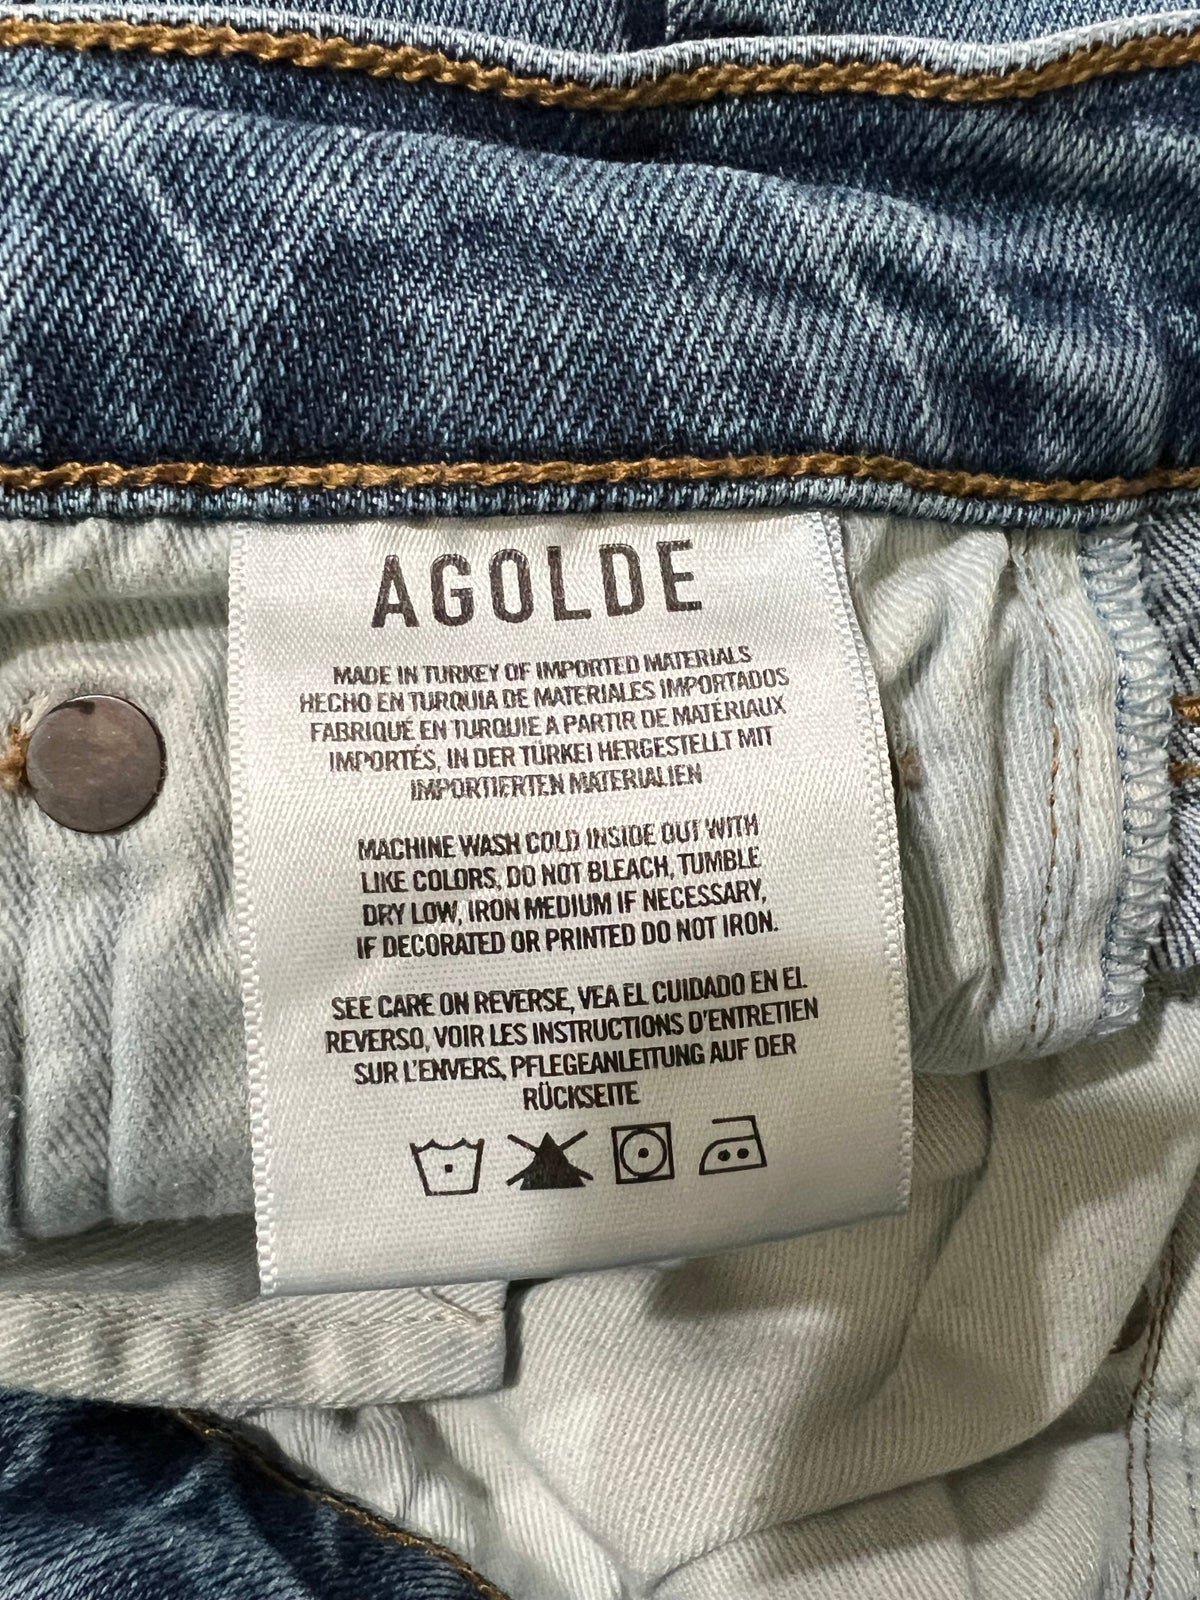 Beautiful AGOLDE Toni High-Rise Straight Slim Jeans, Size 25 juR4KTPxI on sale